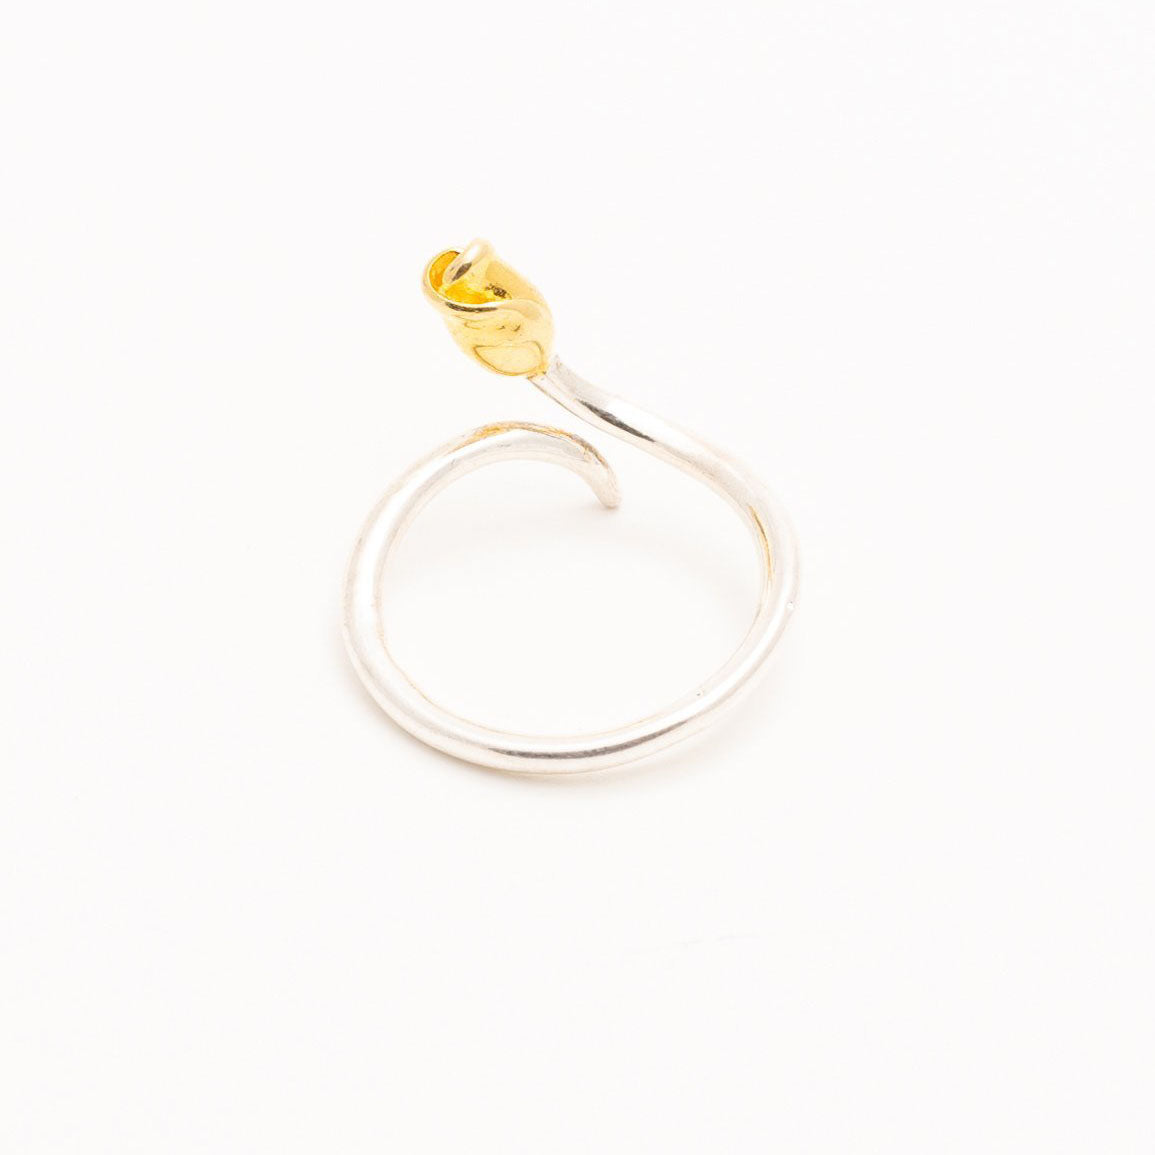 Minimalist Tulip Ring in 925 Silver